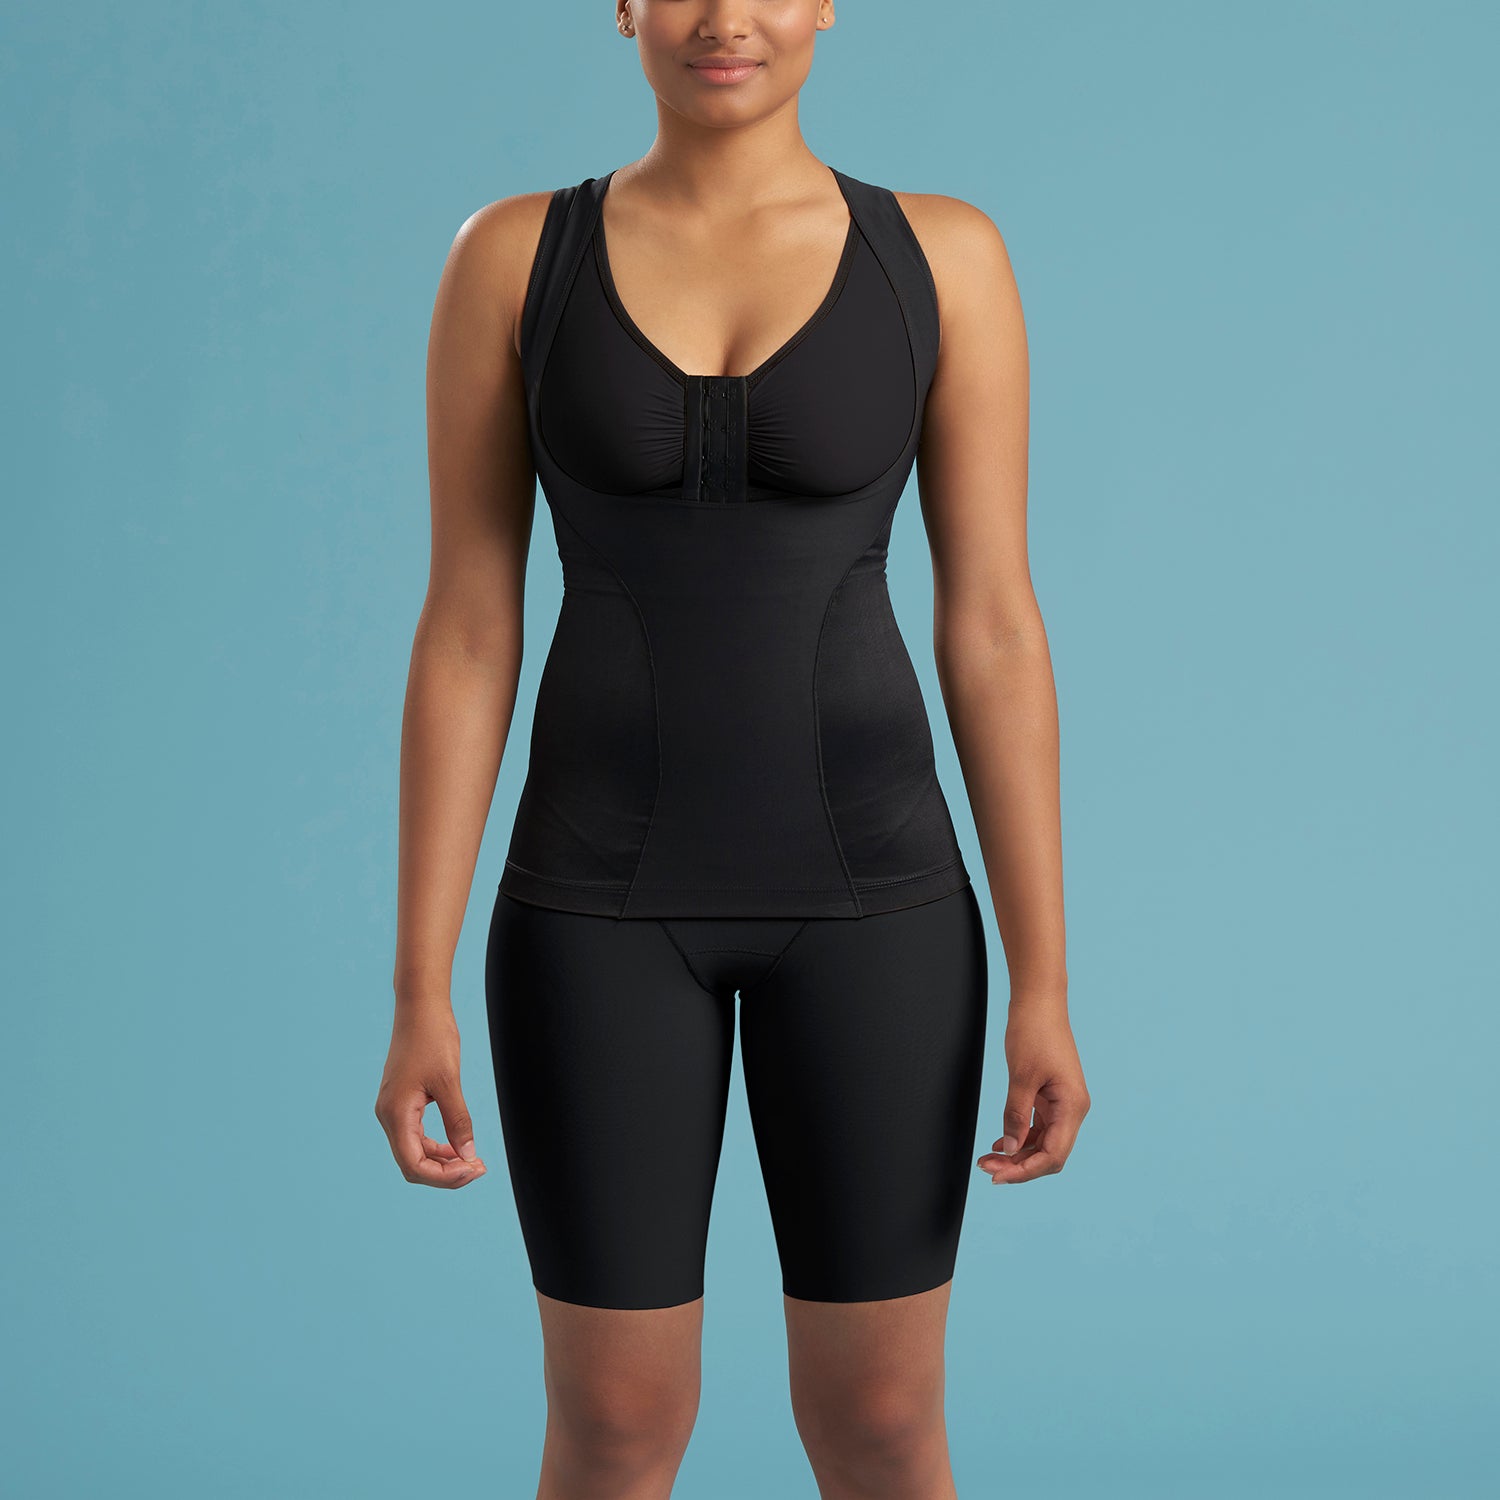 Women's Compression Girdle with Reinforced Panels - Bikini Length